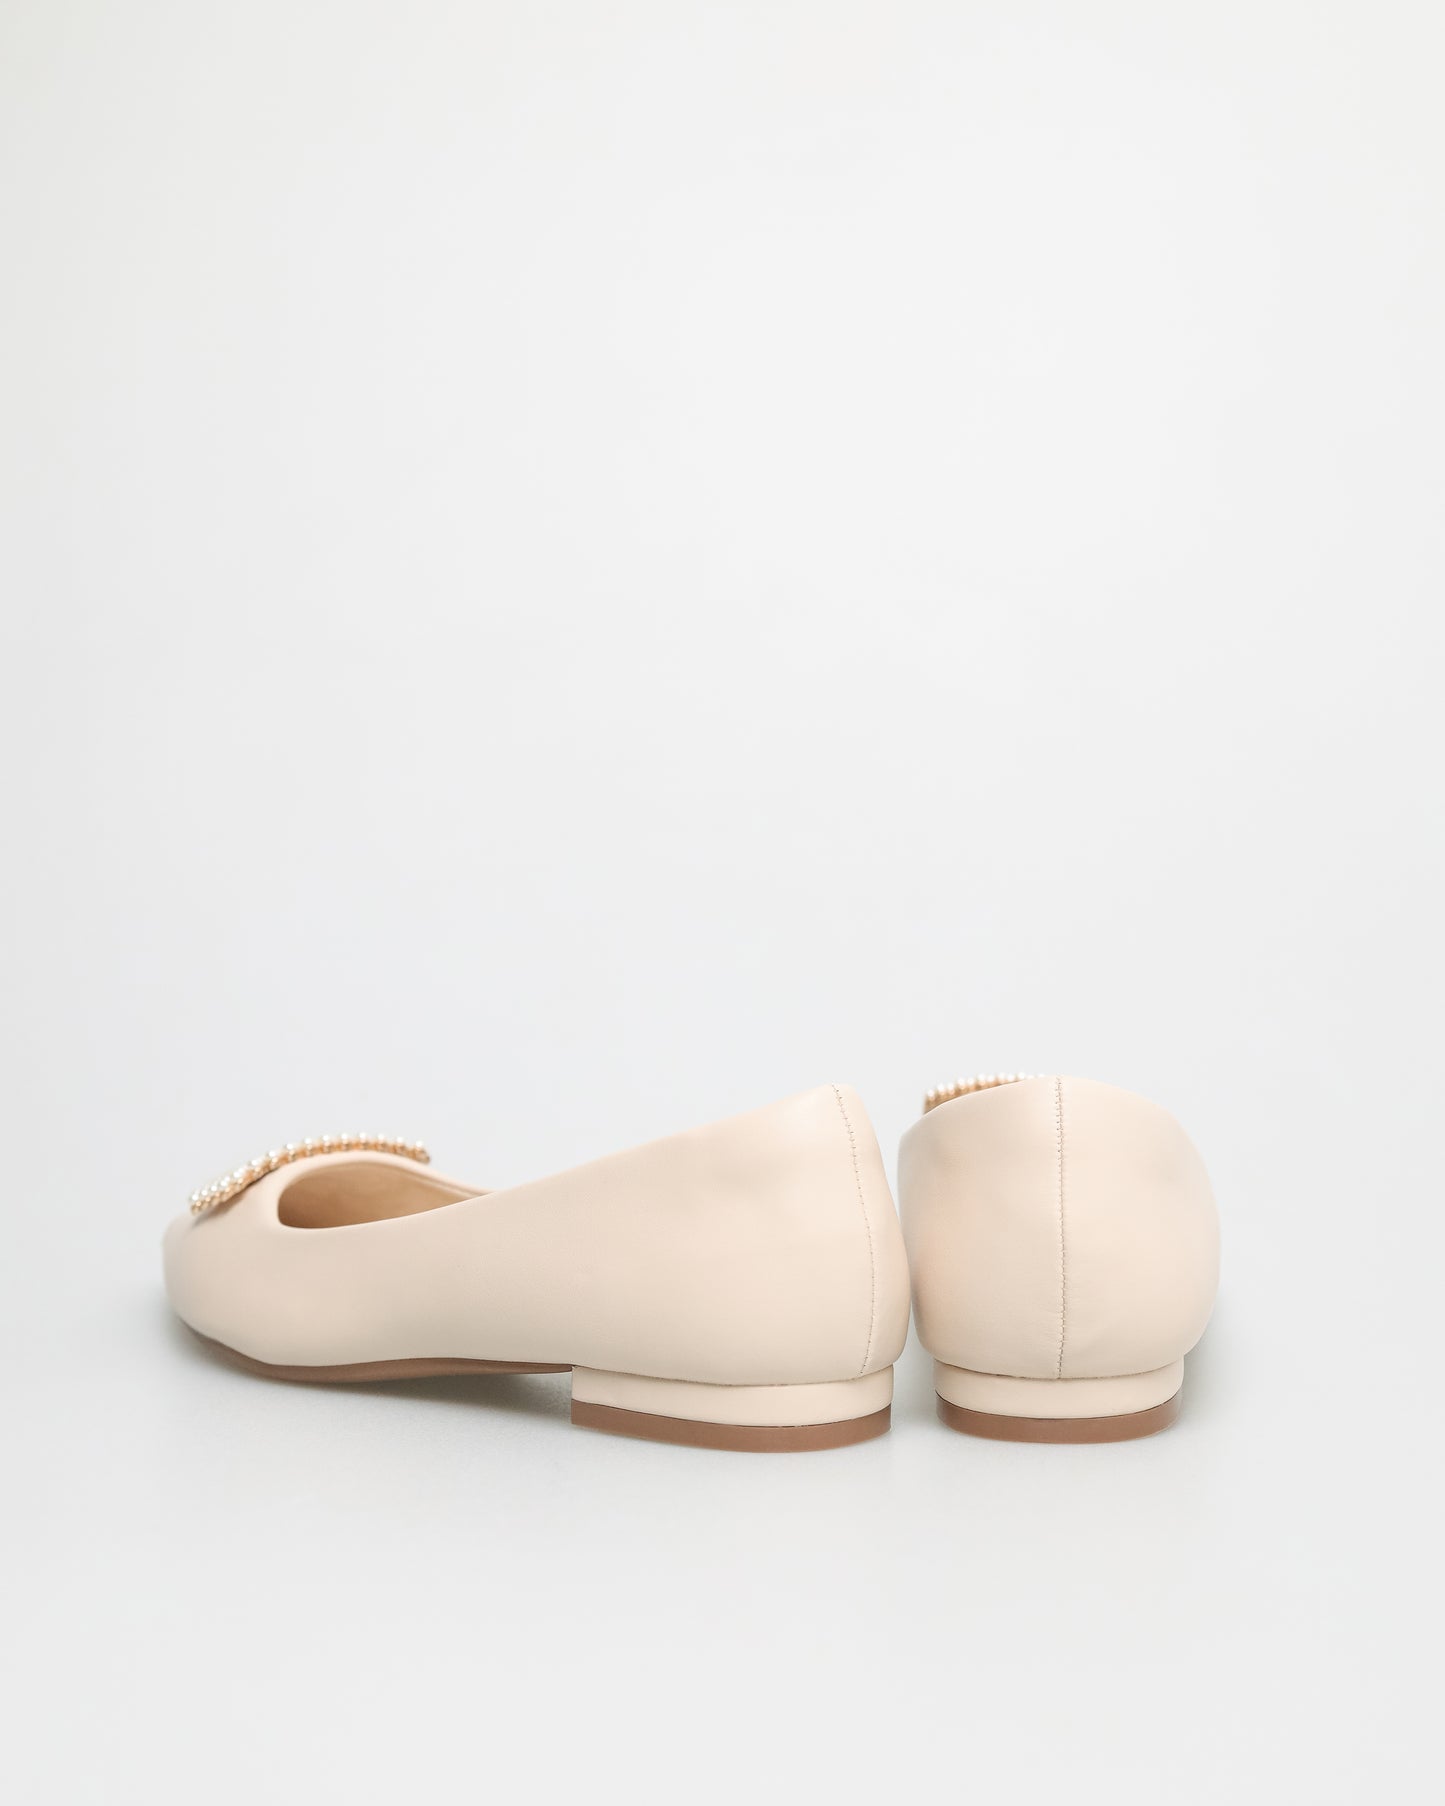 Tomaz NN201 Ladies Pointed-Toe Flats (Cream)